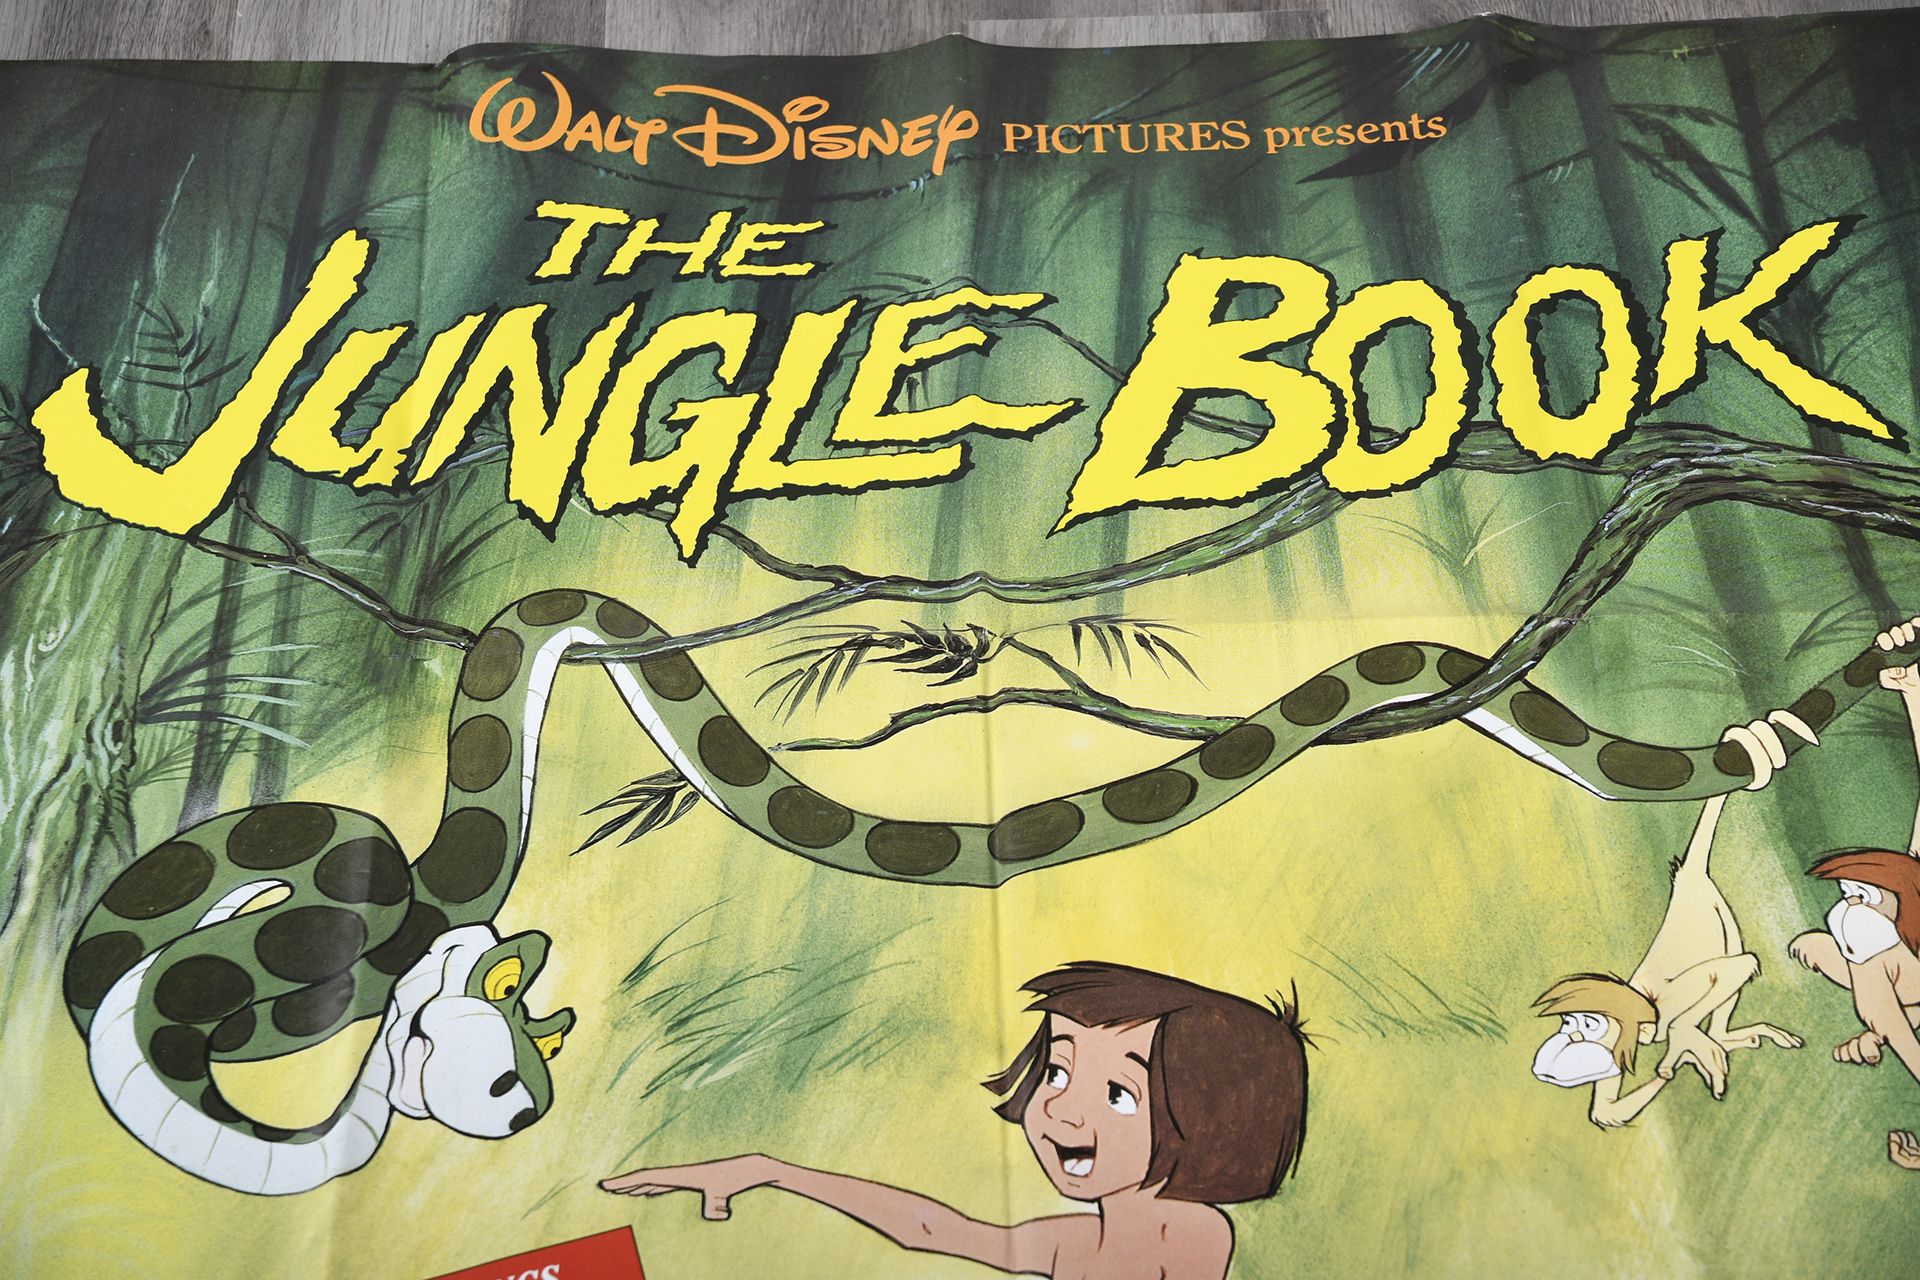 Very Rare "Jungle Book" Film Poster